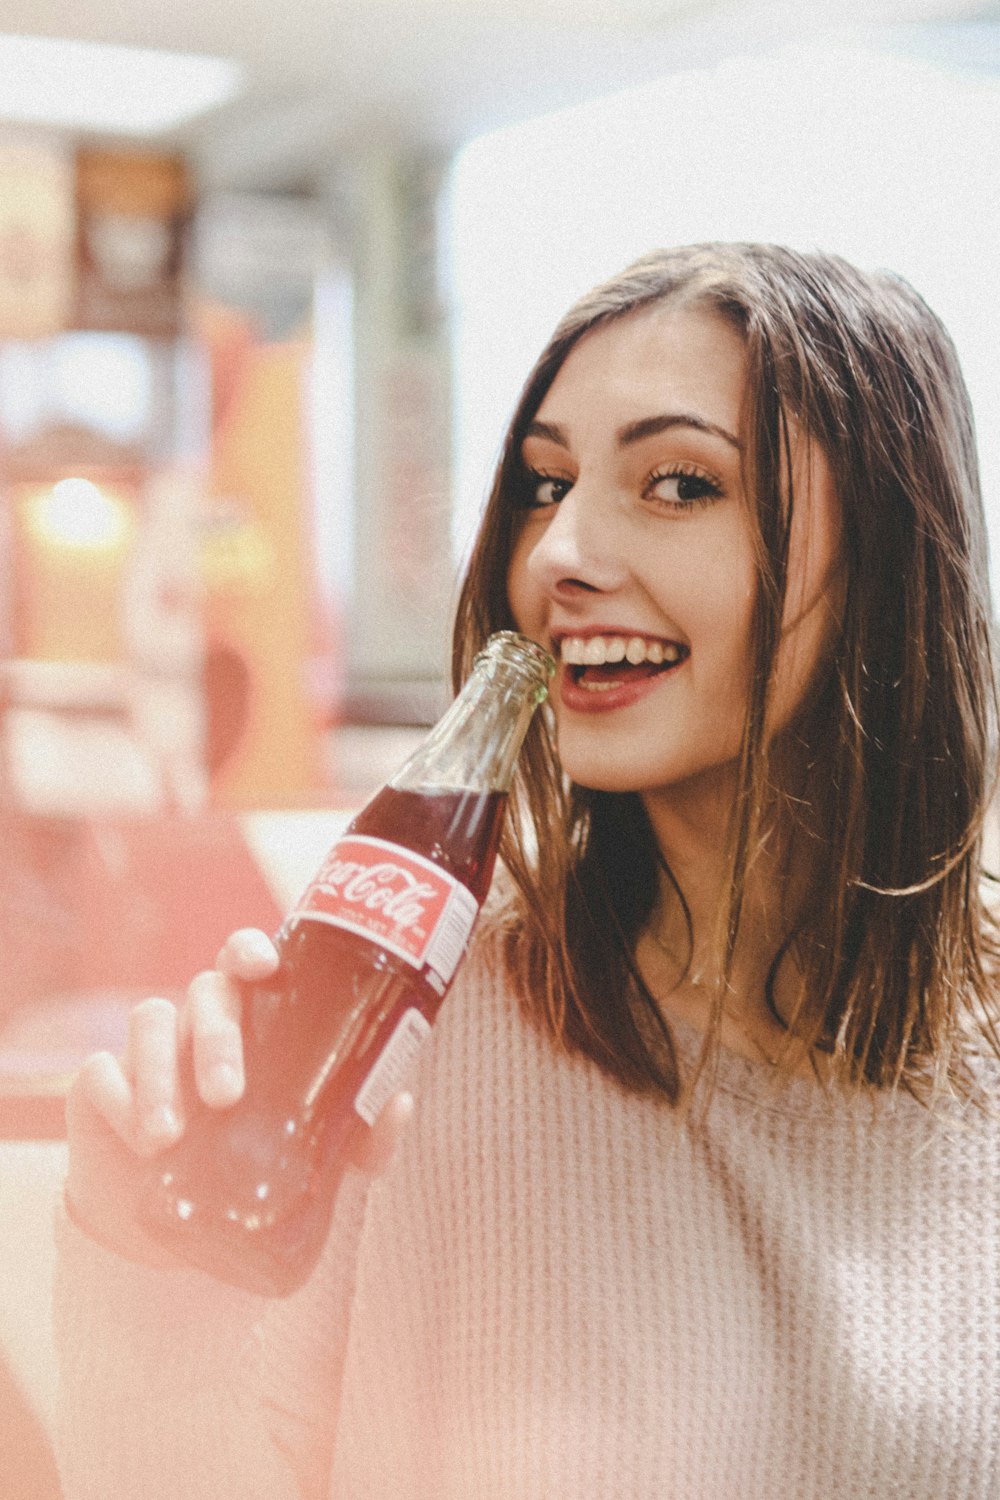 Frau mit Coca-Cola-Flasche